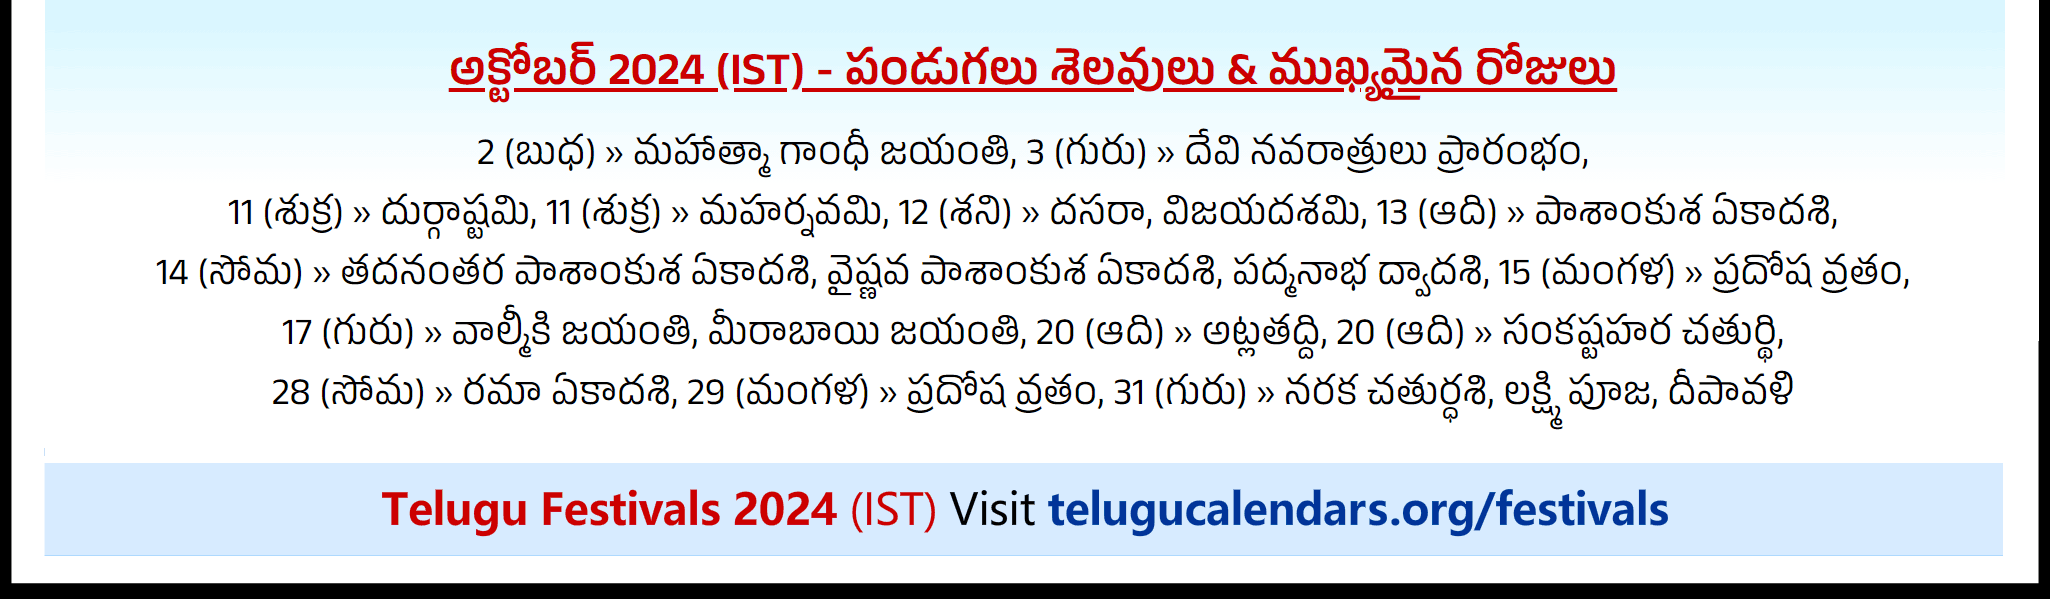 Telugu Festivals 2024 October London